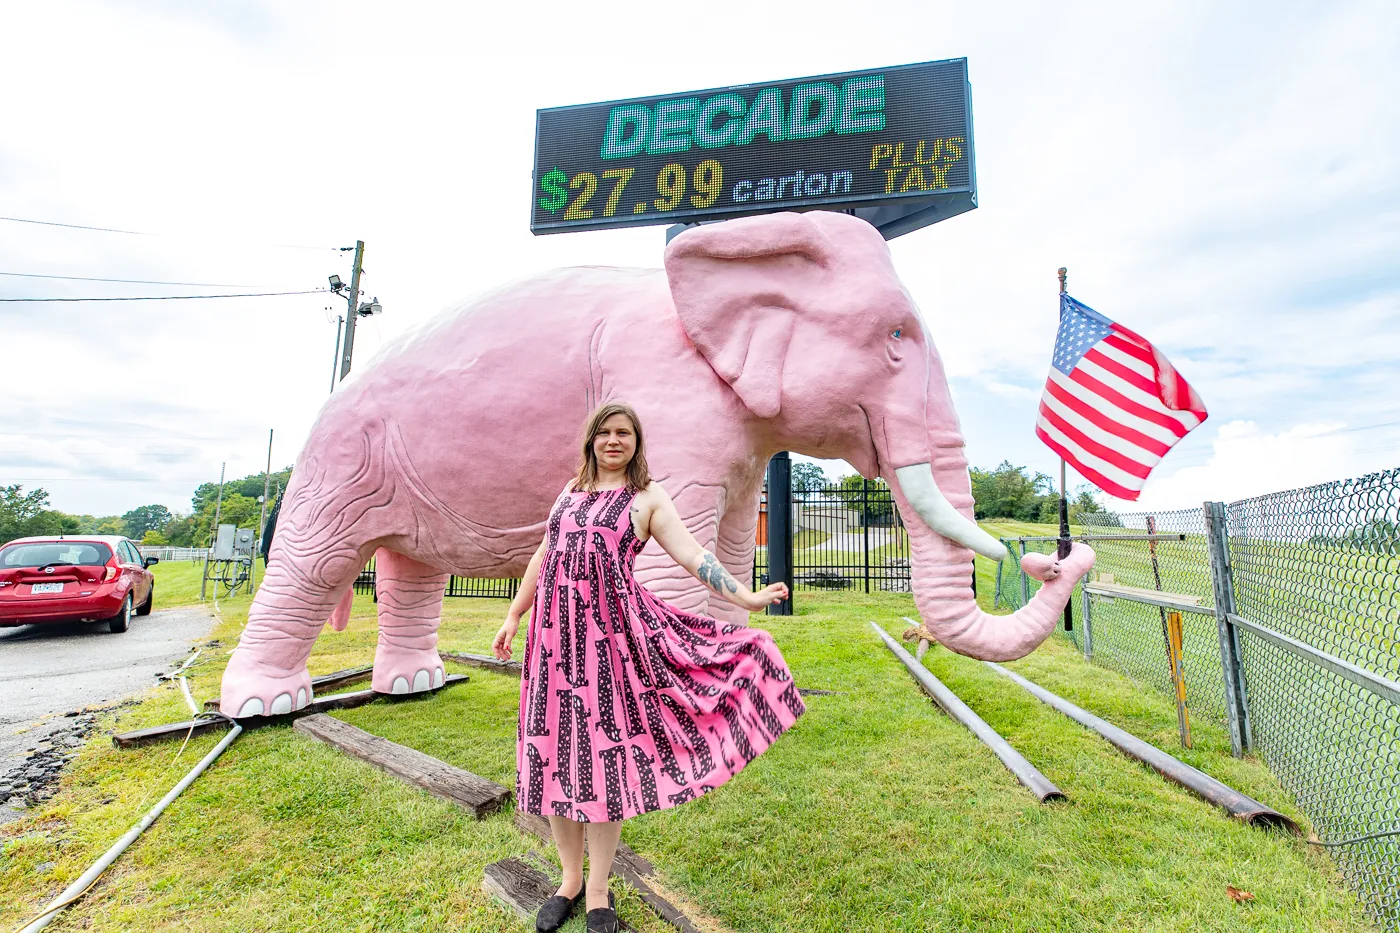 Big pink elephant gas station roadside attraction in Fenton, Missouri